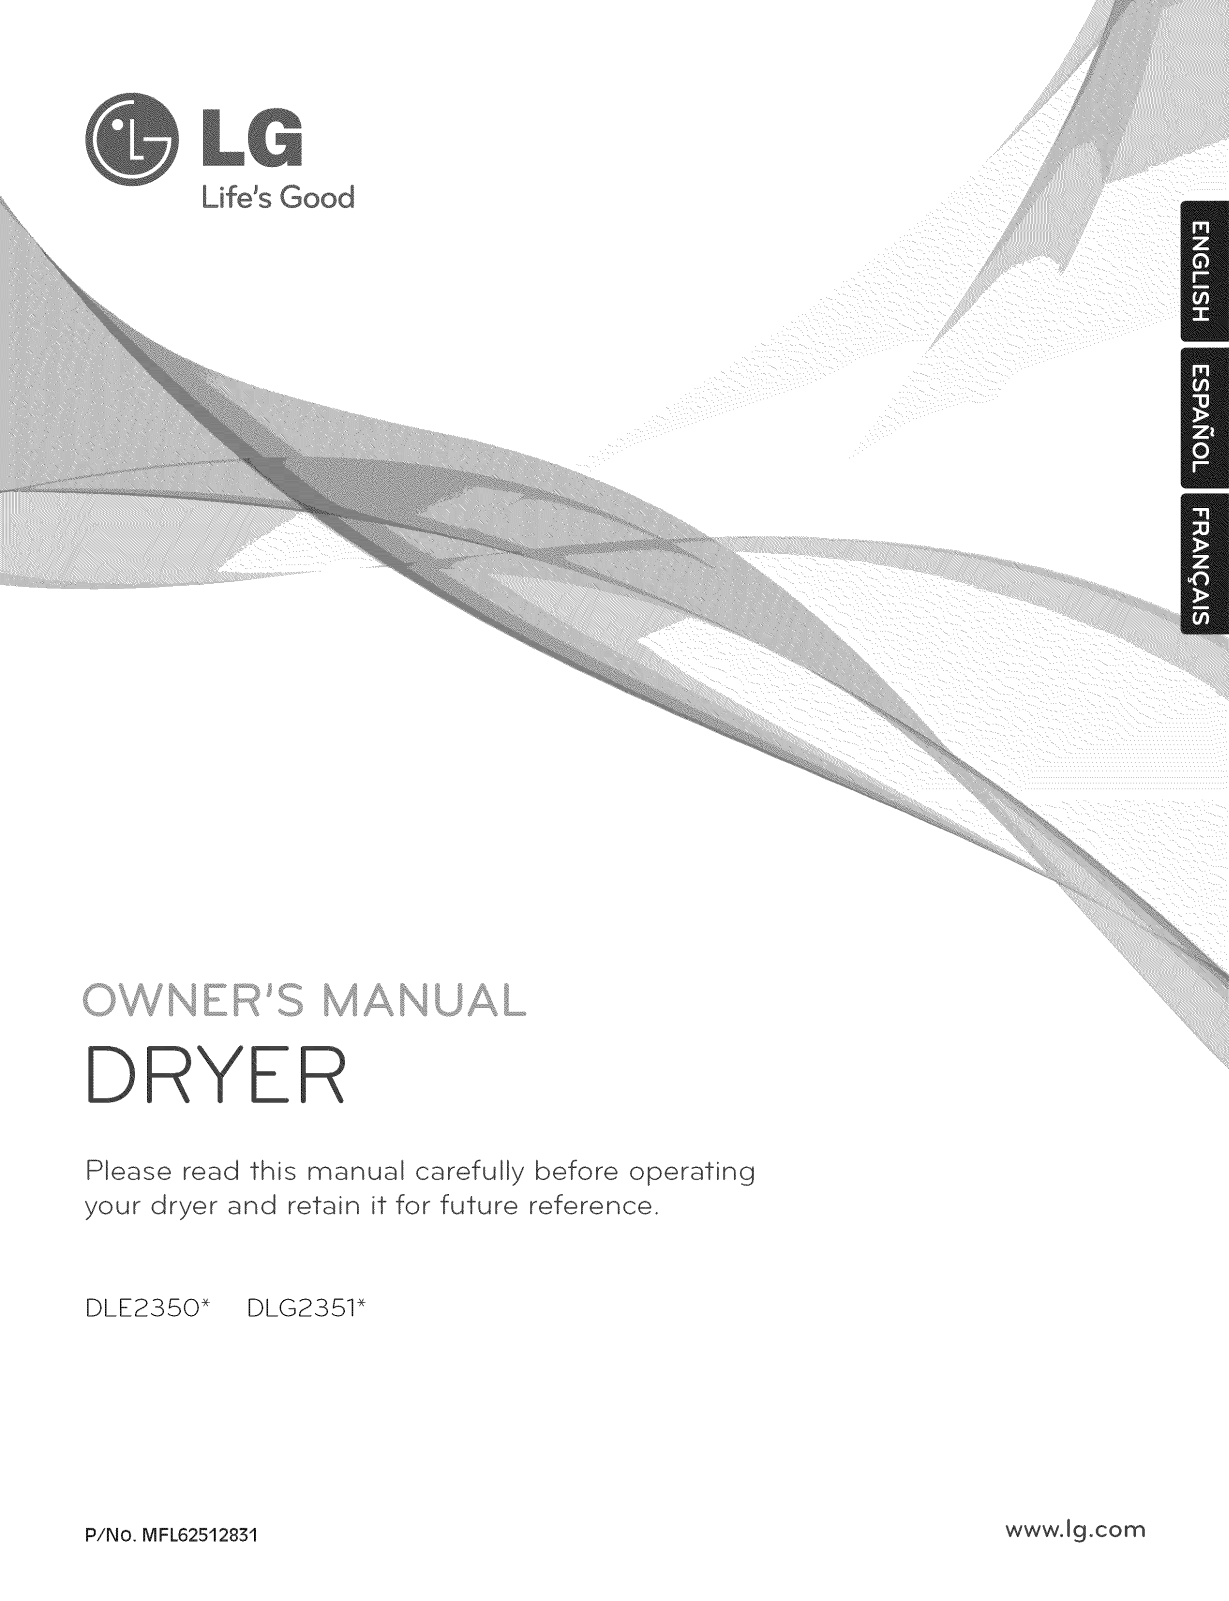 LG DLG2351R Owner’s Manual